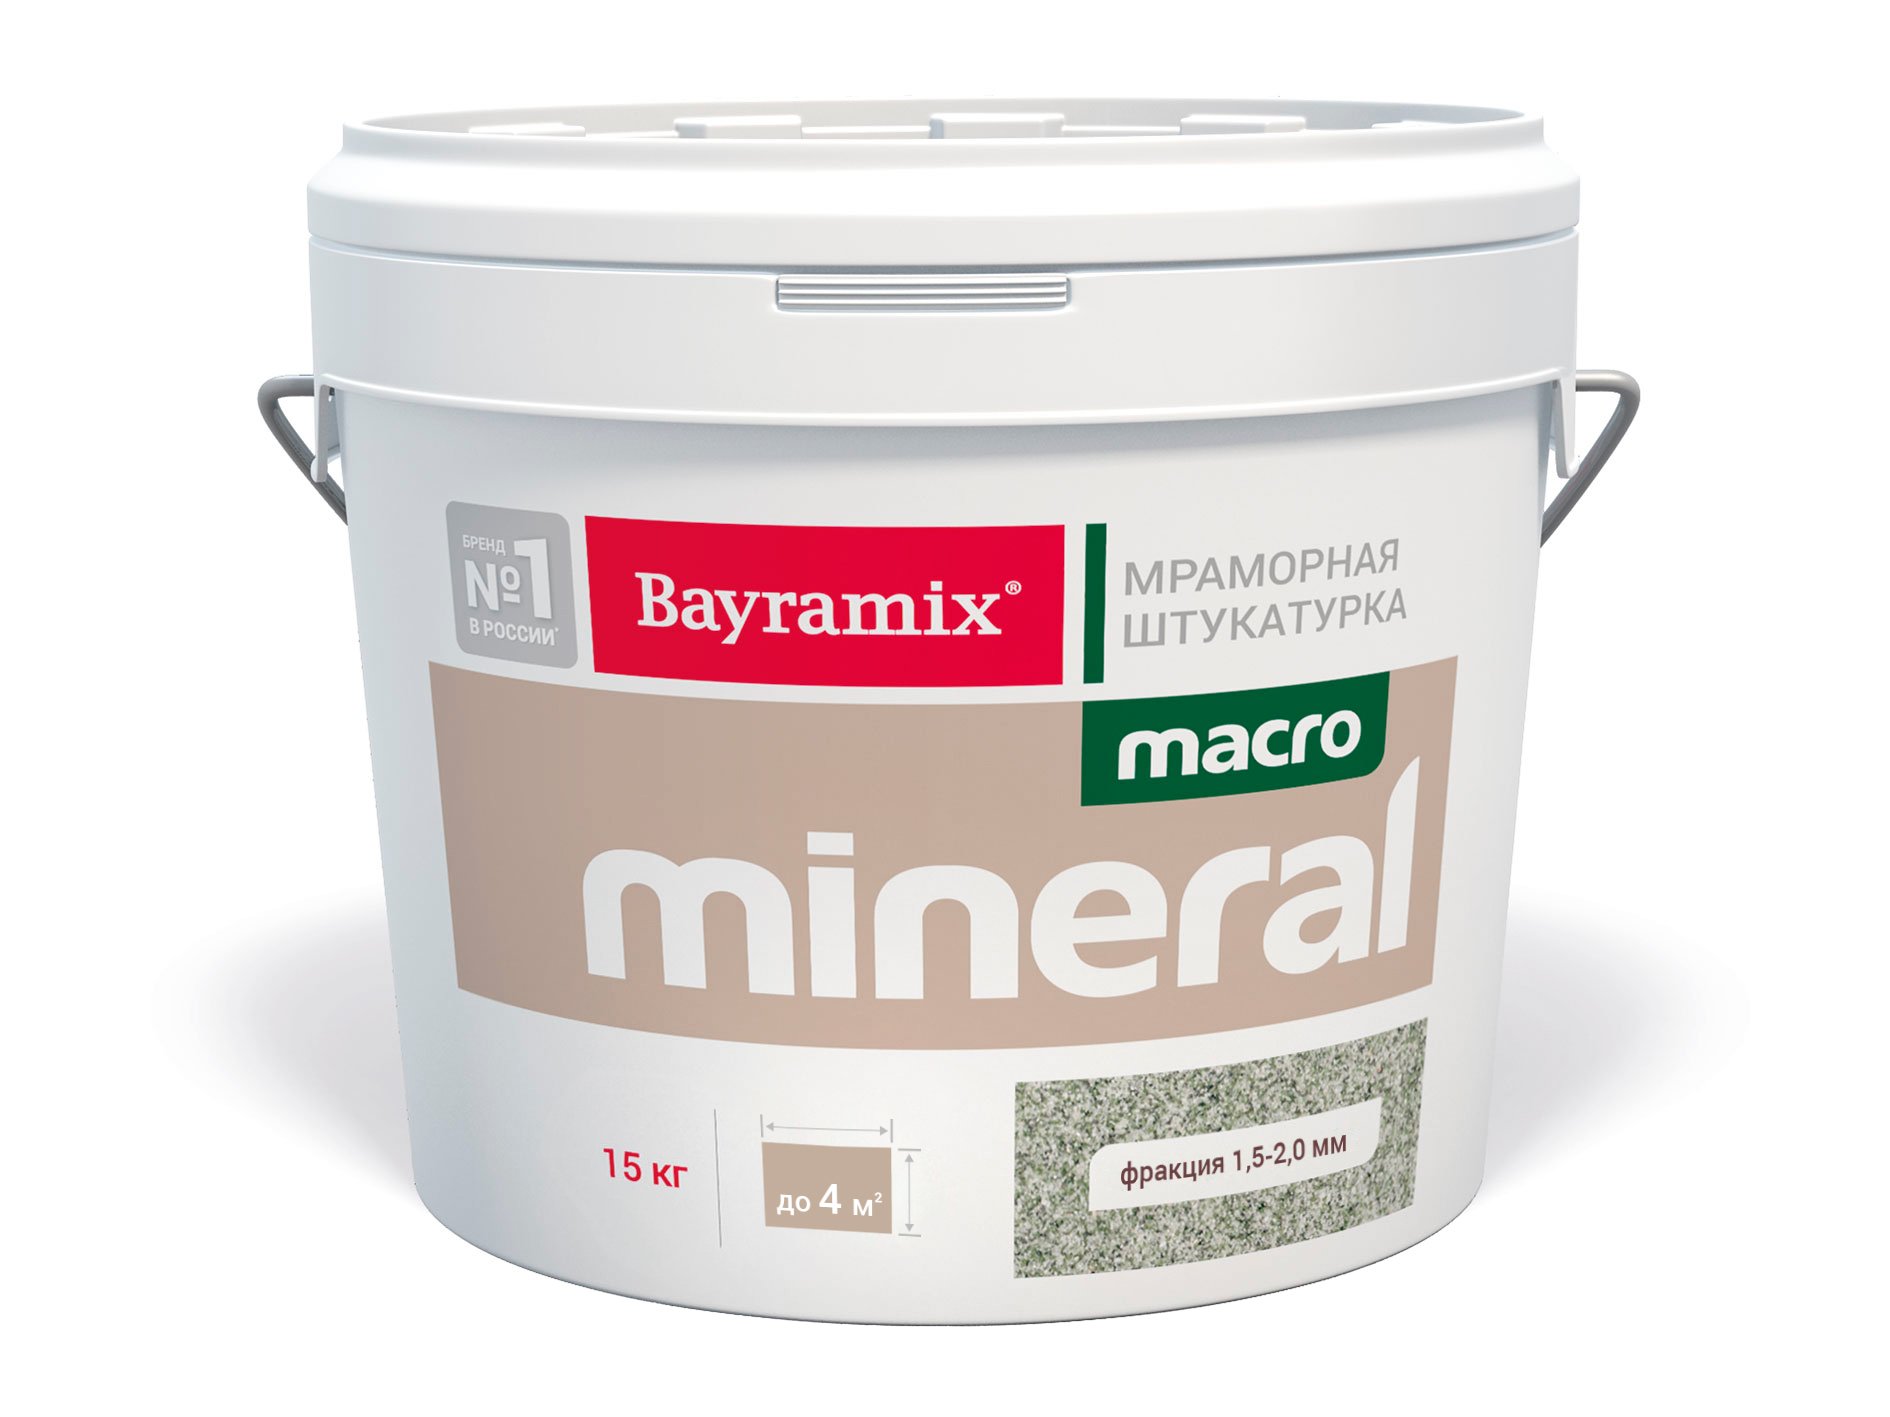 фото Декоративная мраморная штукатурка bayramix macro mineral 1018, 15 кг